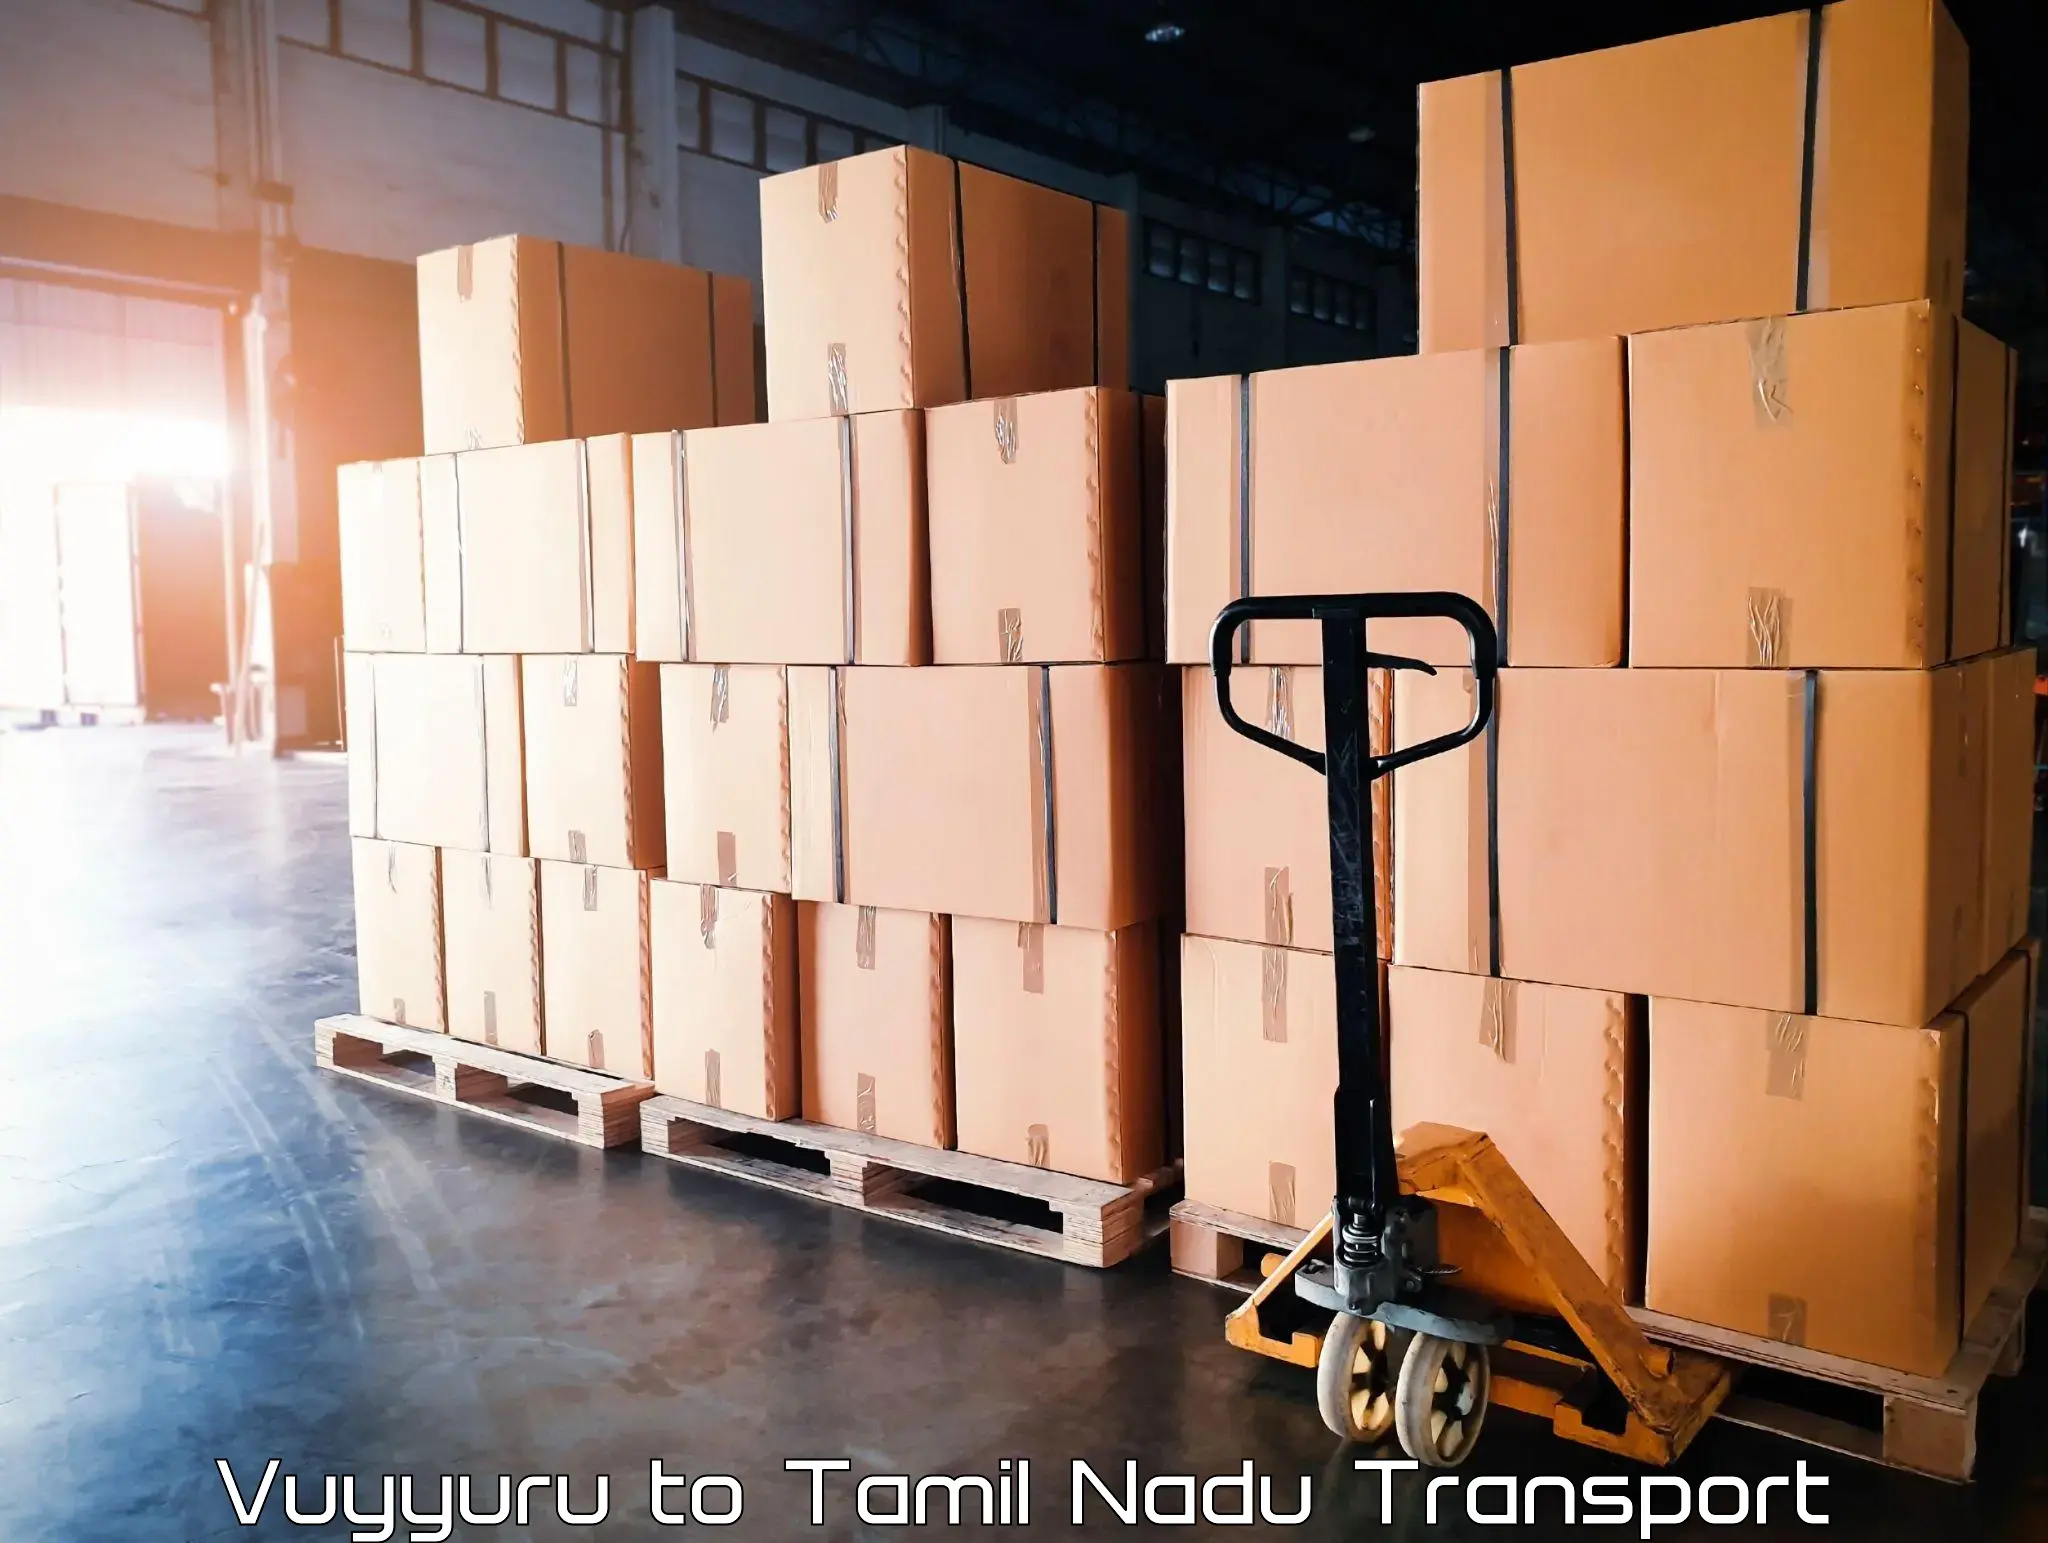 Transport bike from one state to another Vuyyuru to Narikkudi